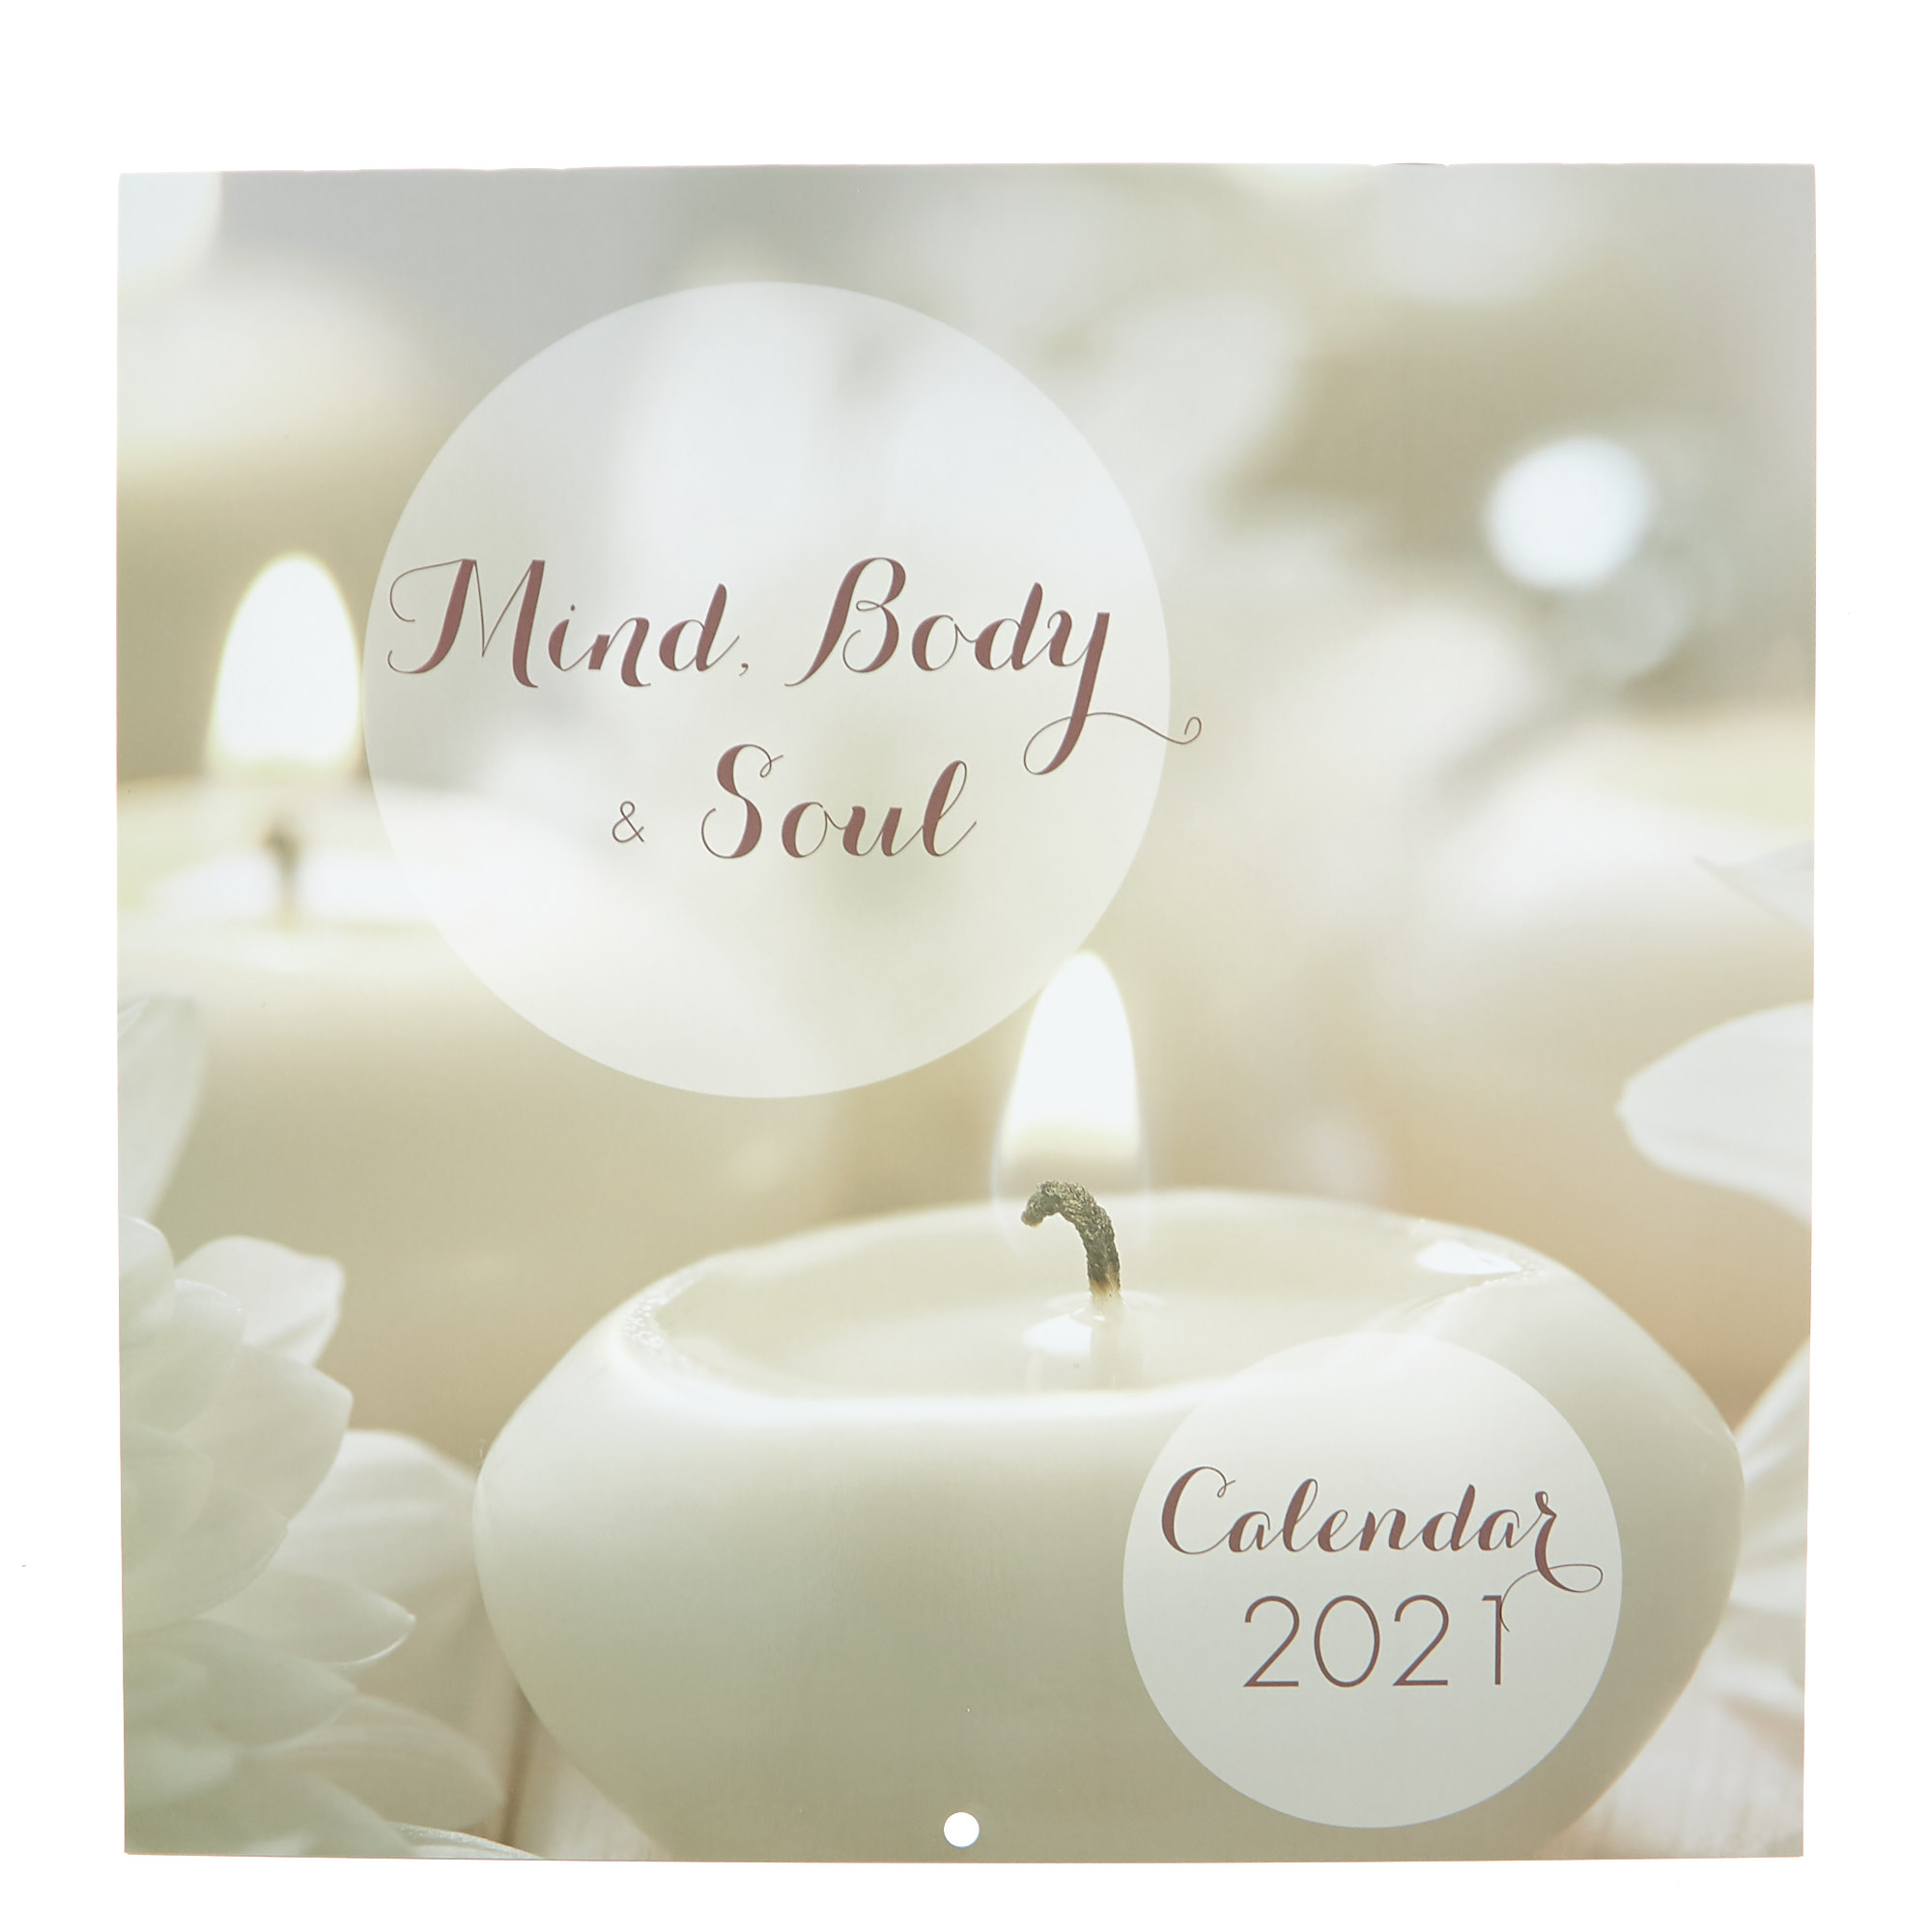 Mind, Body & Soul 2021 Calendar